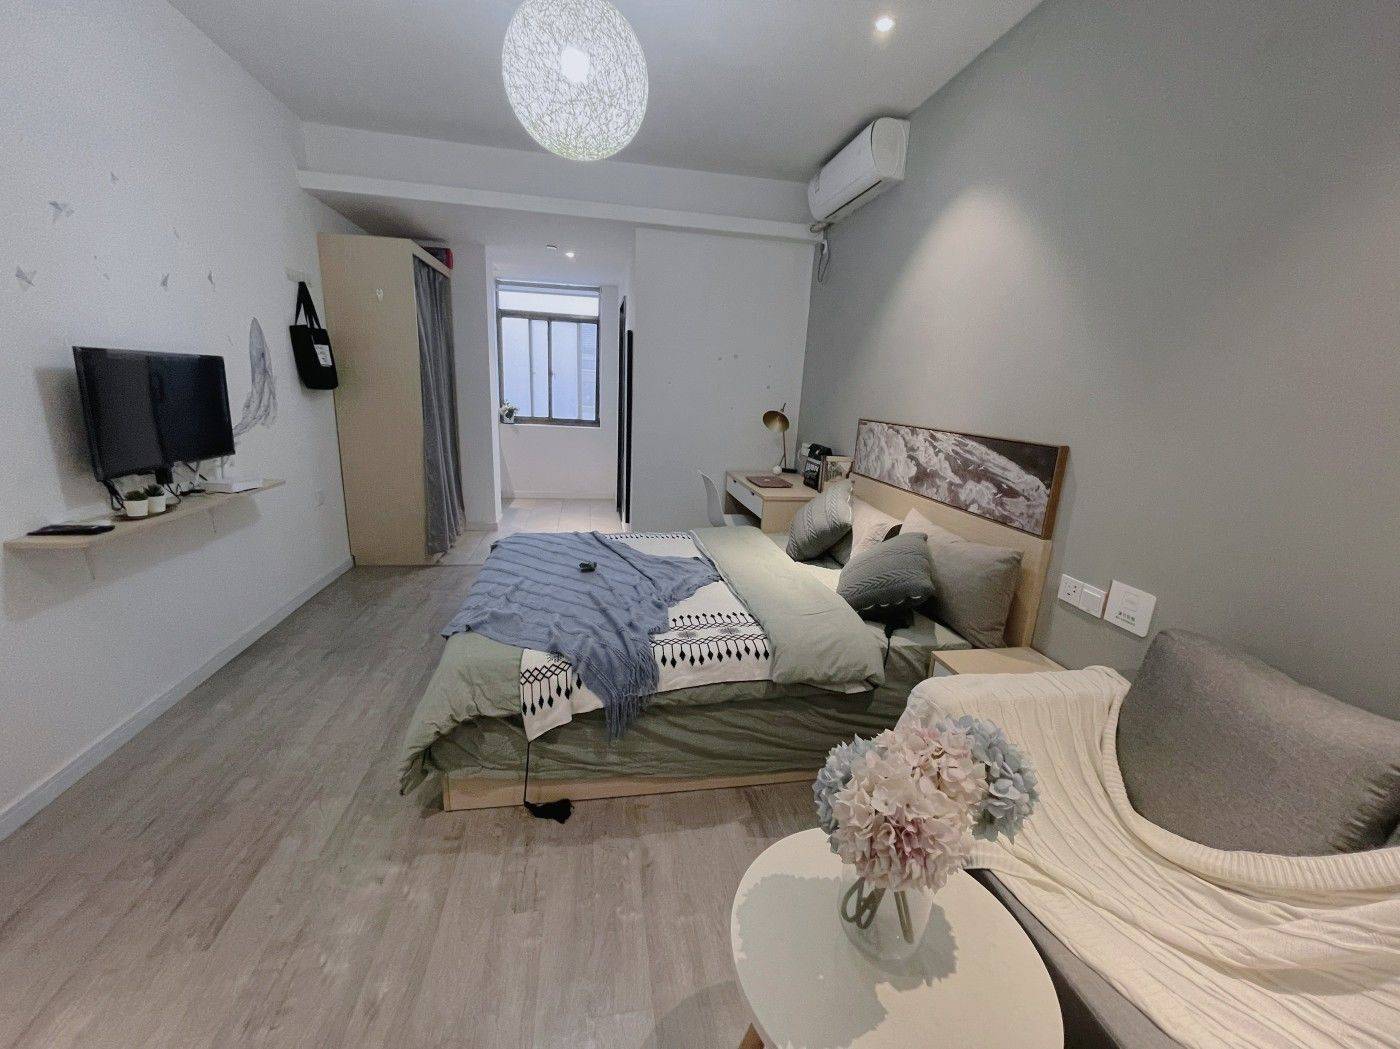 Nanjing-Gulou-Cozy Home,Clean&Comfy,No Gender Limit,Hustle & Bustle